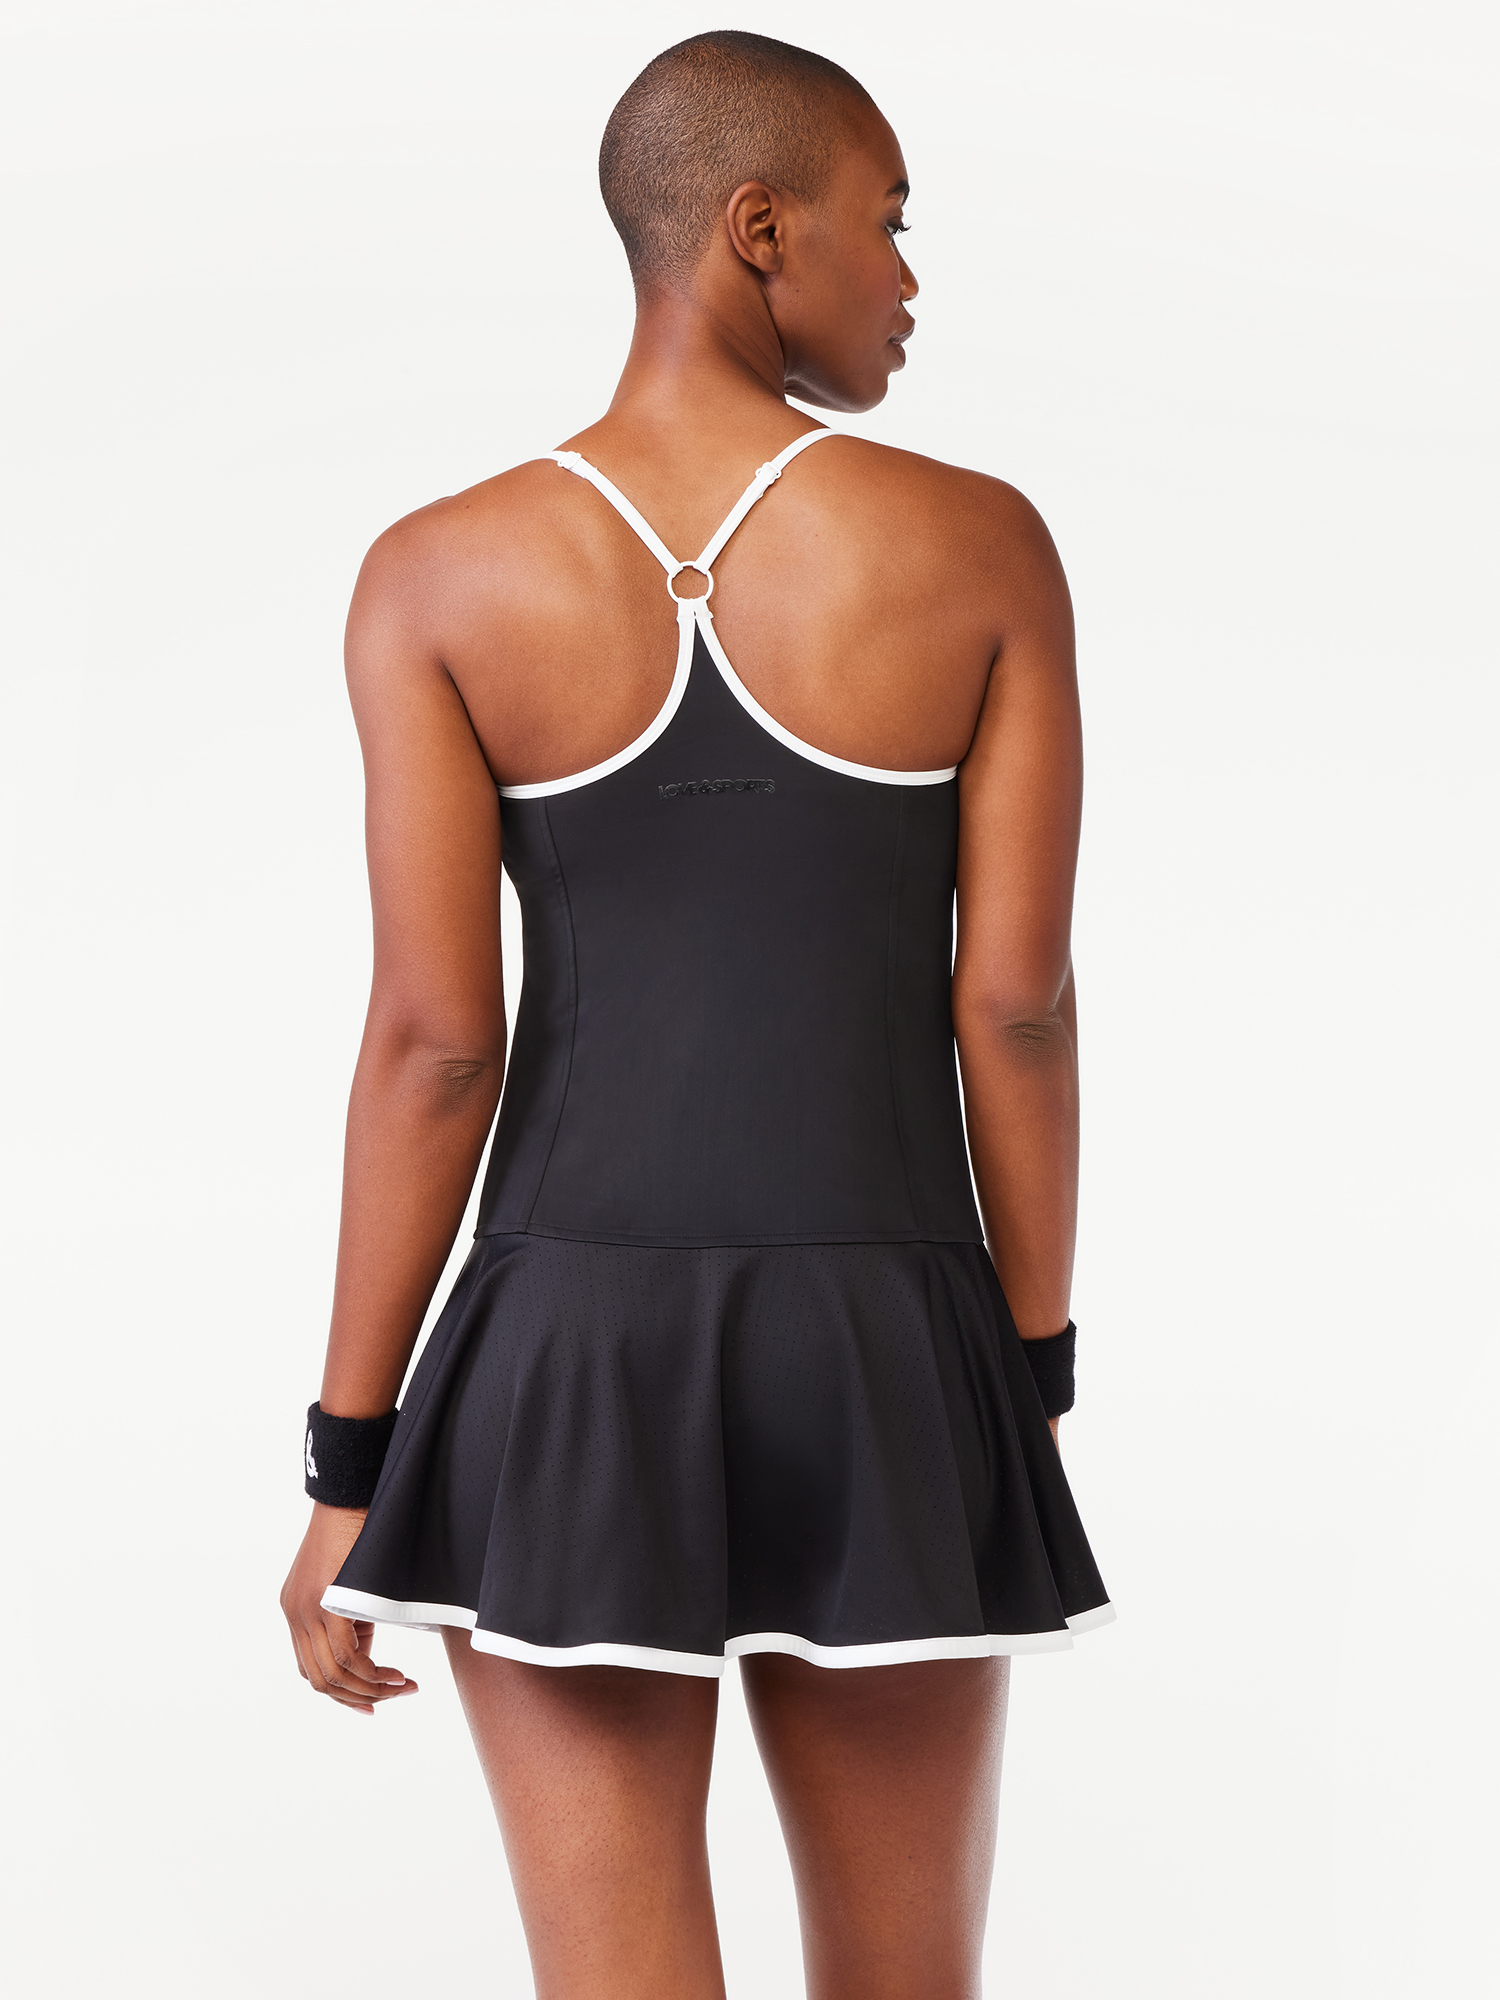 Love & Sports Women’s Game on Tennis Dress, Sizes XS-XXXL - image 4 of 7